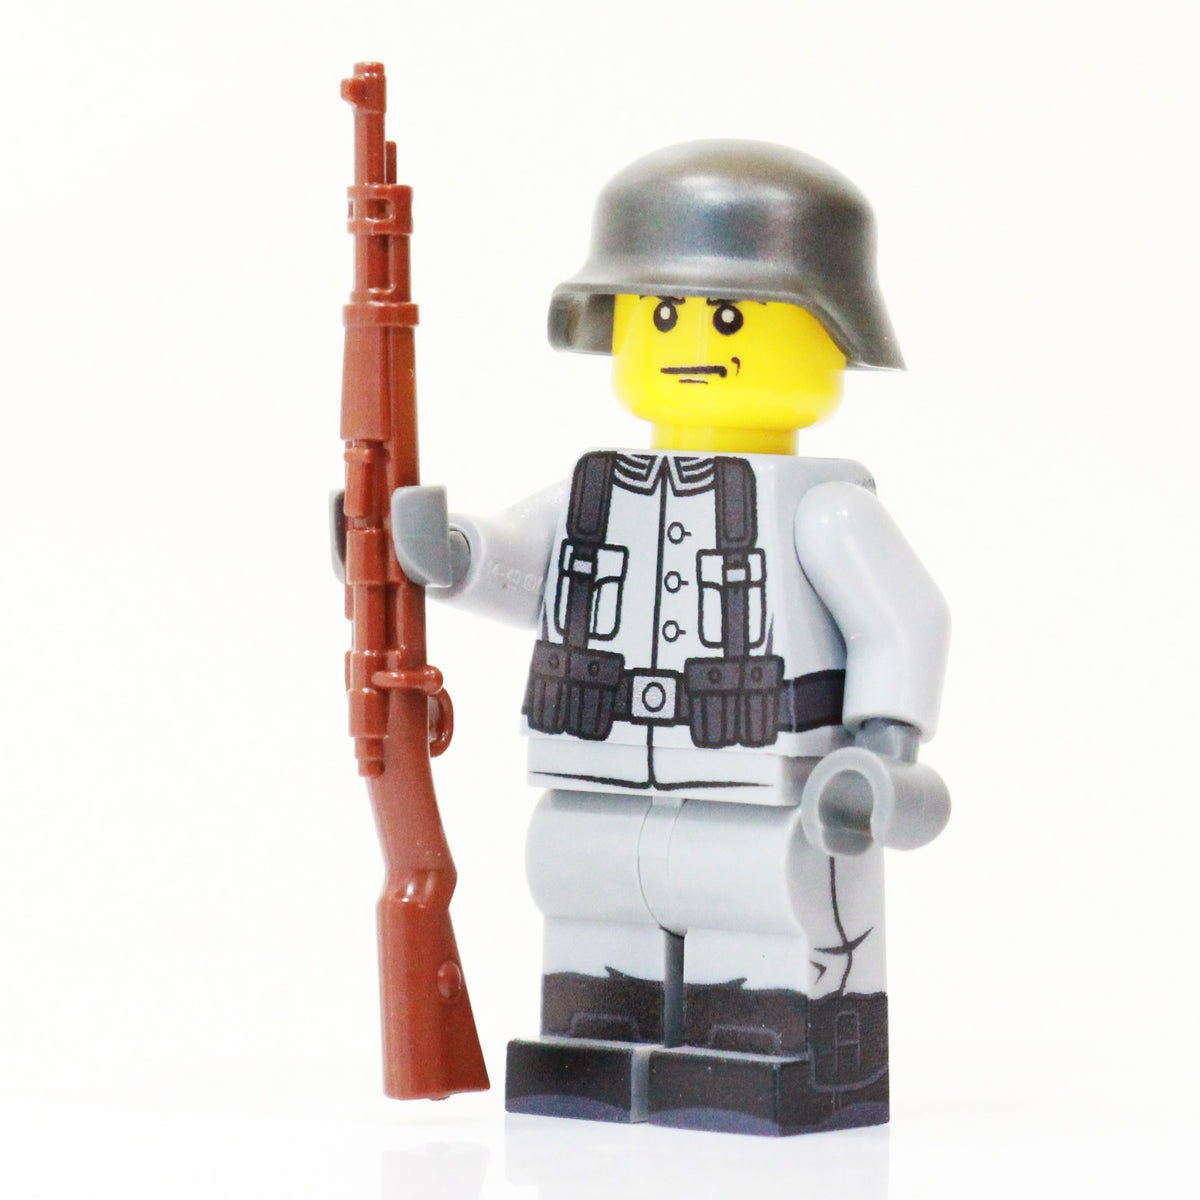 WW2 German Riflemen – BrickTactical